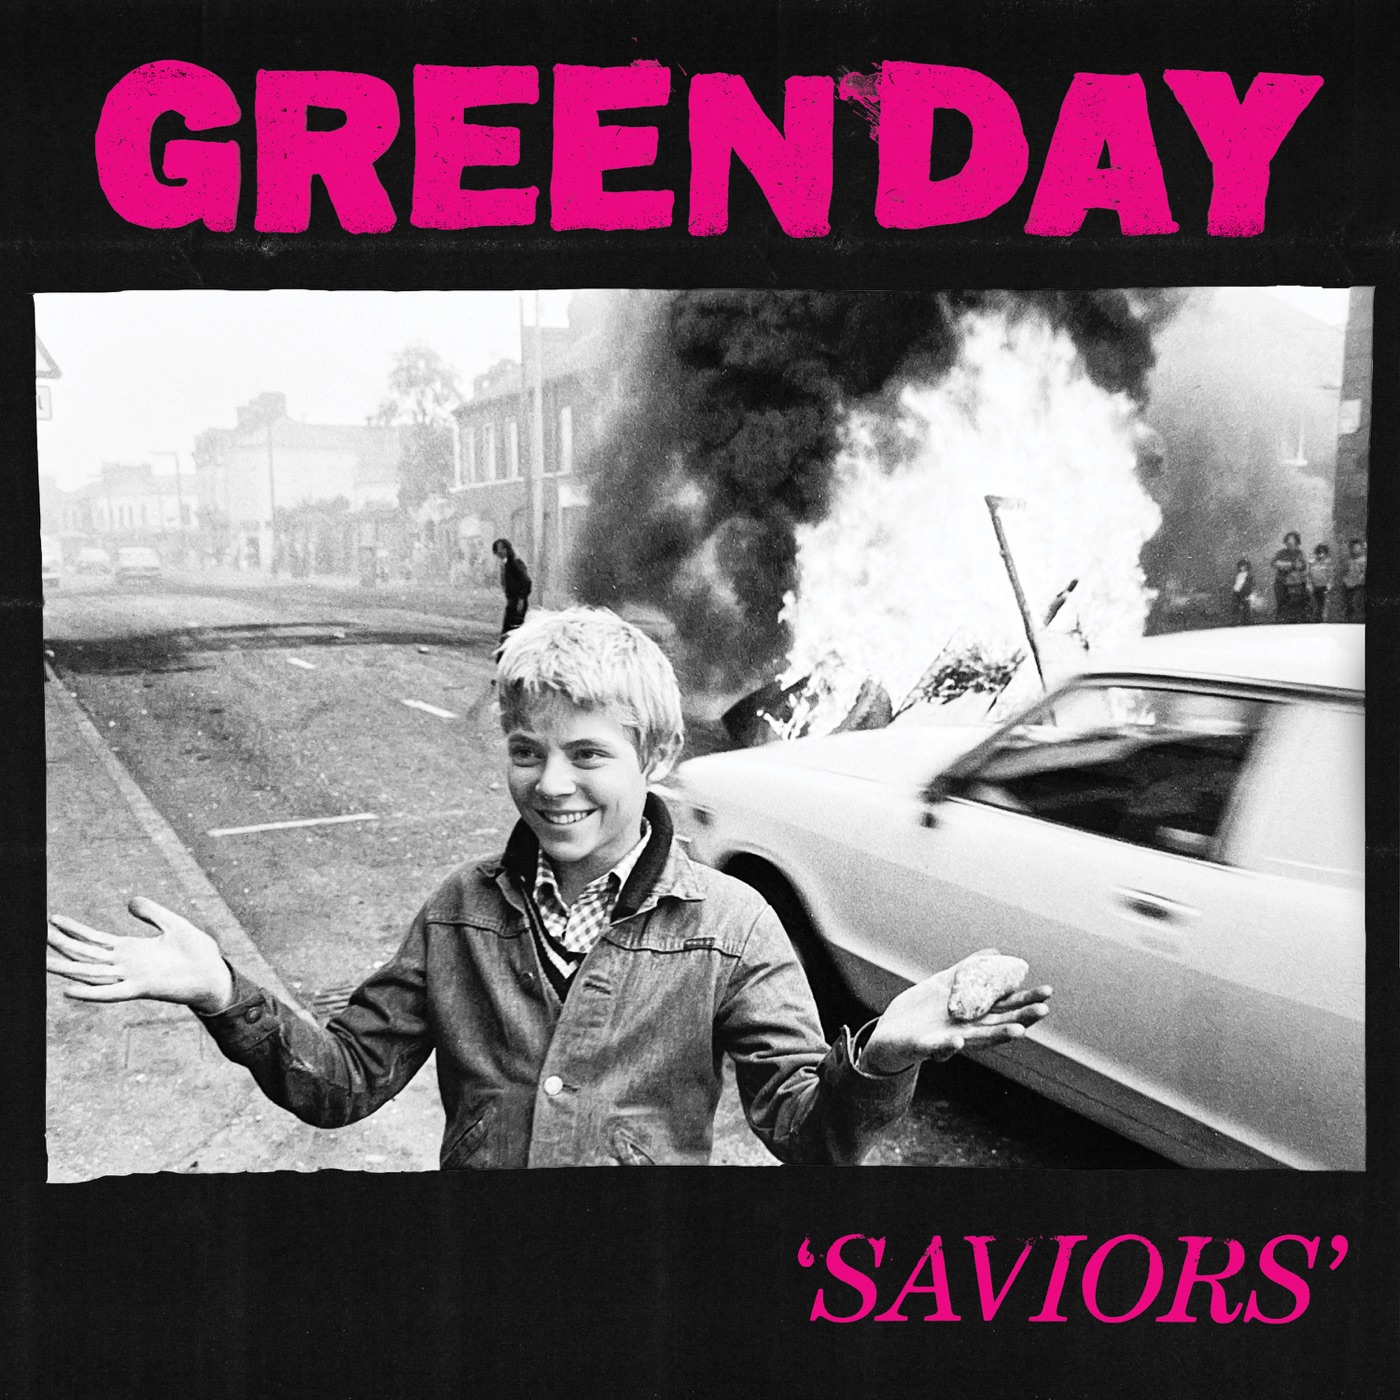 Saviors by Green Day